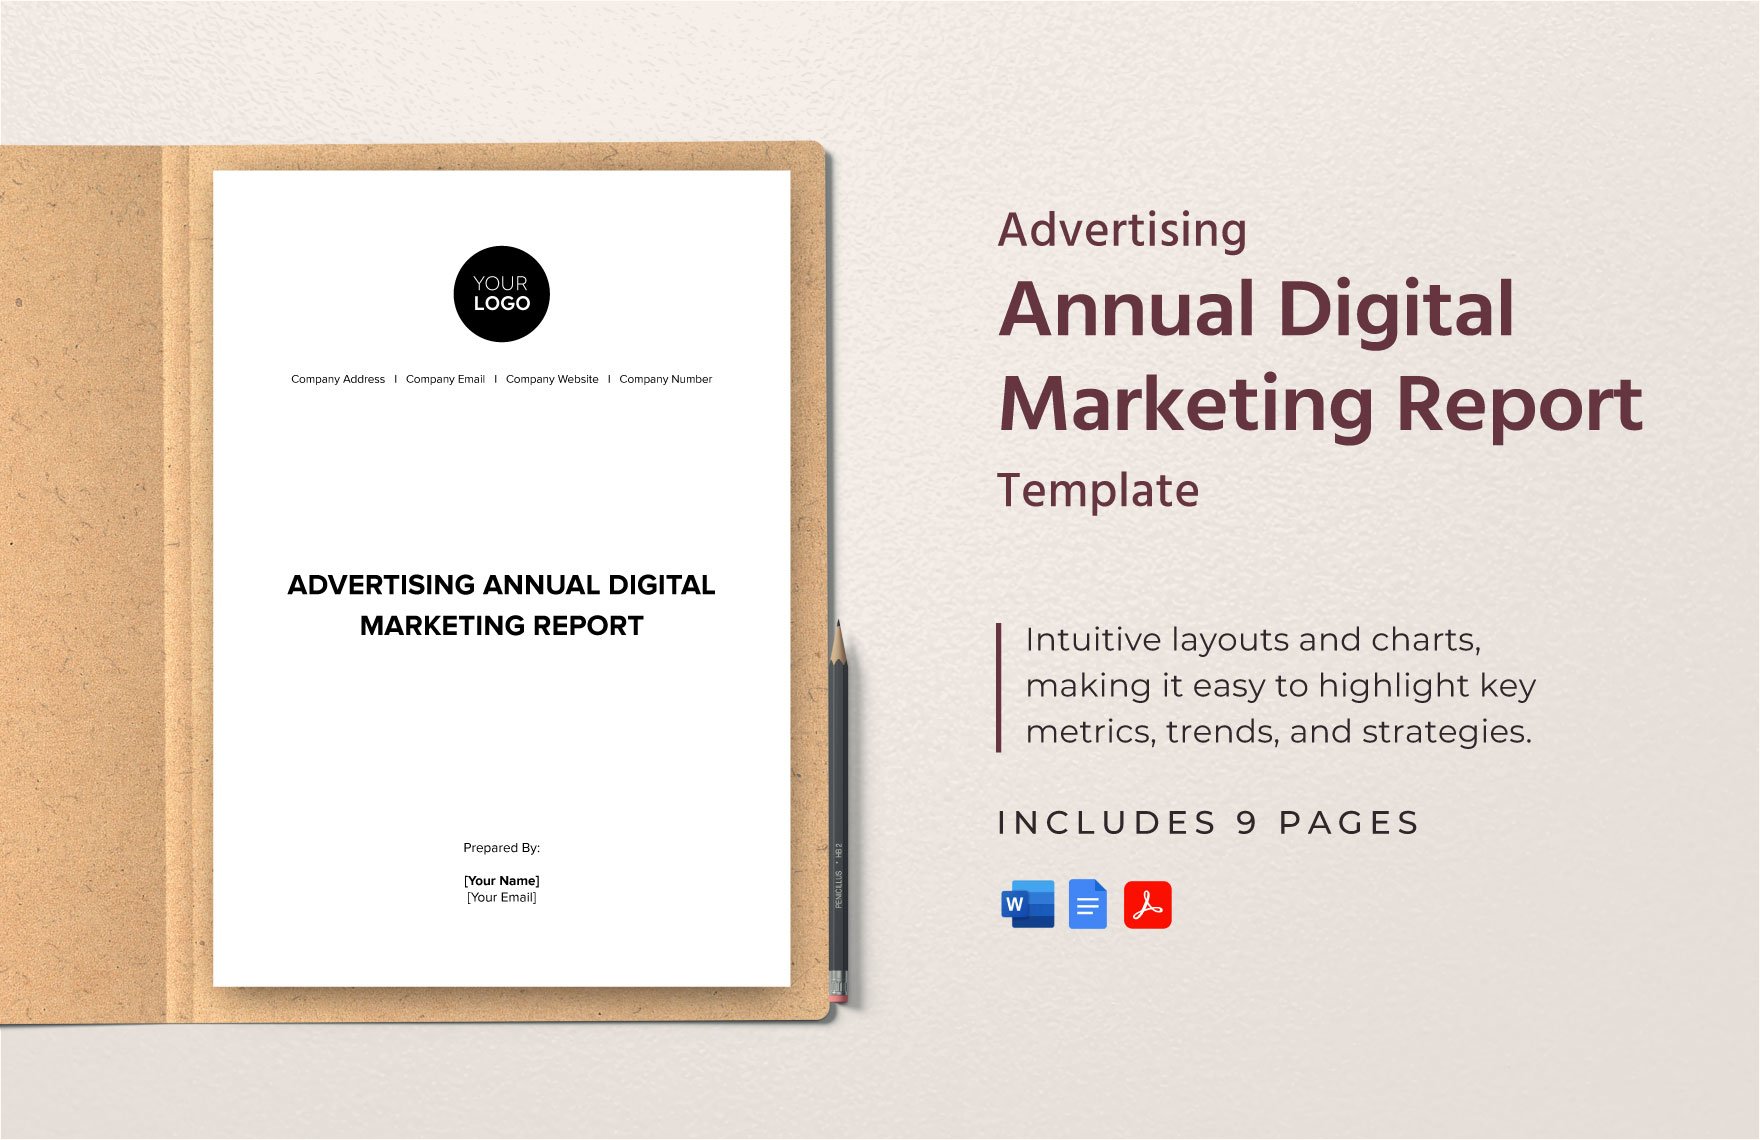 Advertising Annual Digital Marketing Report Template